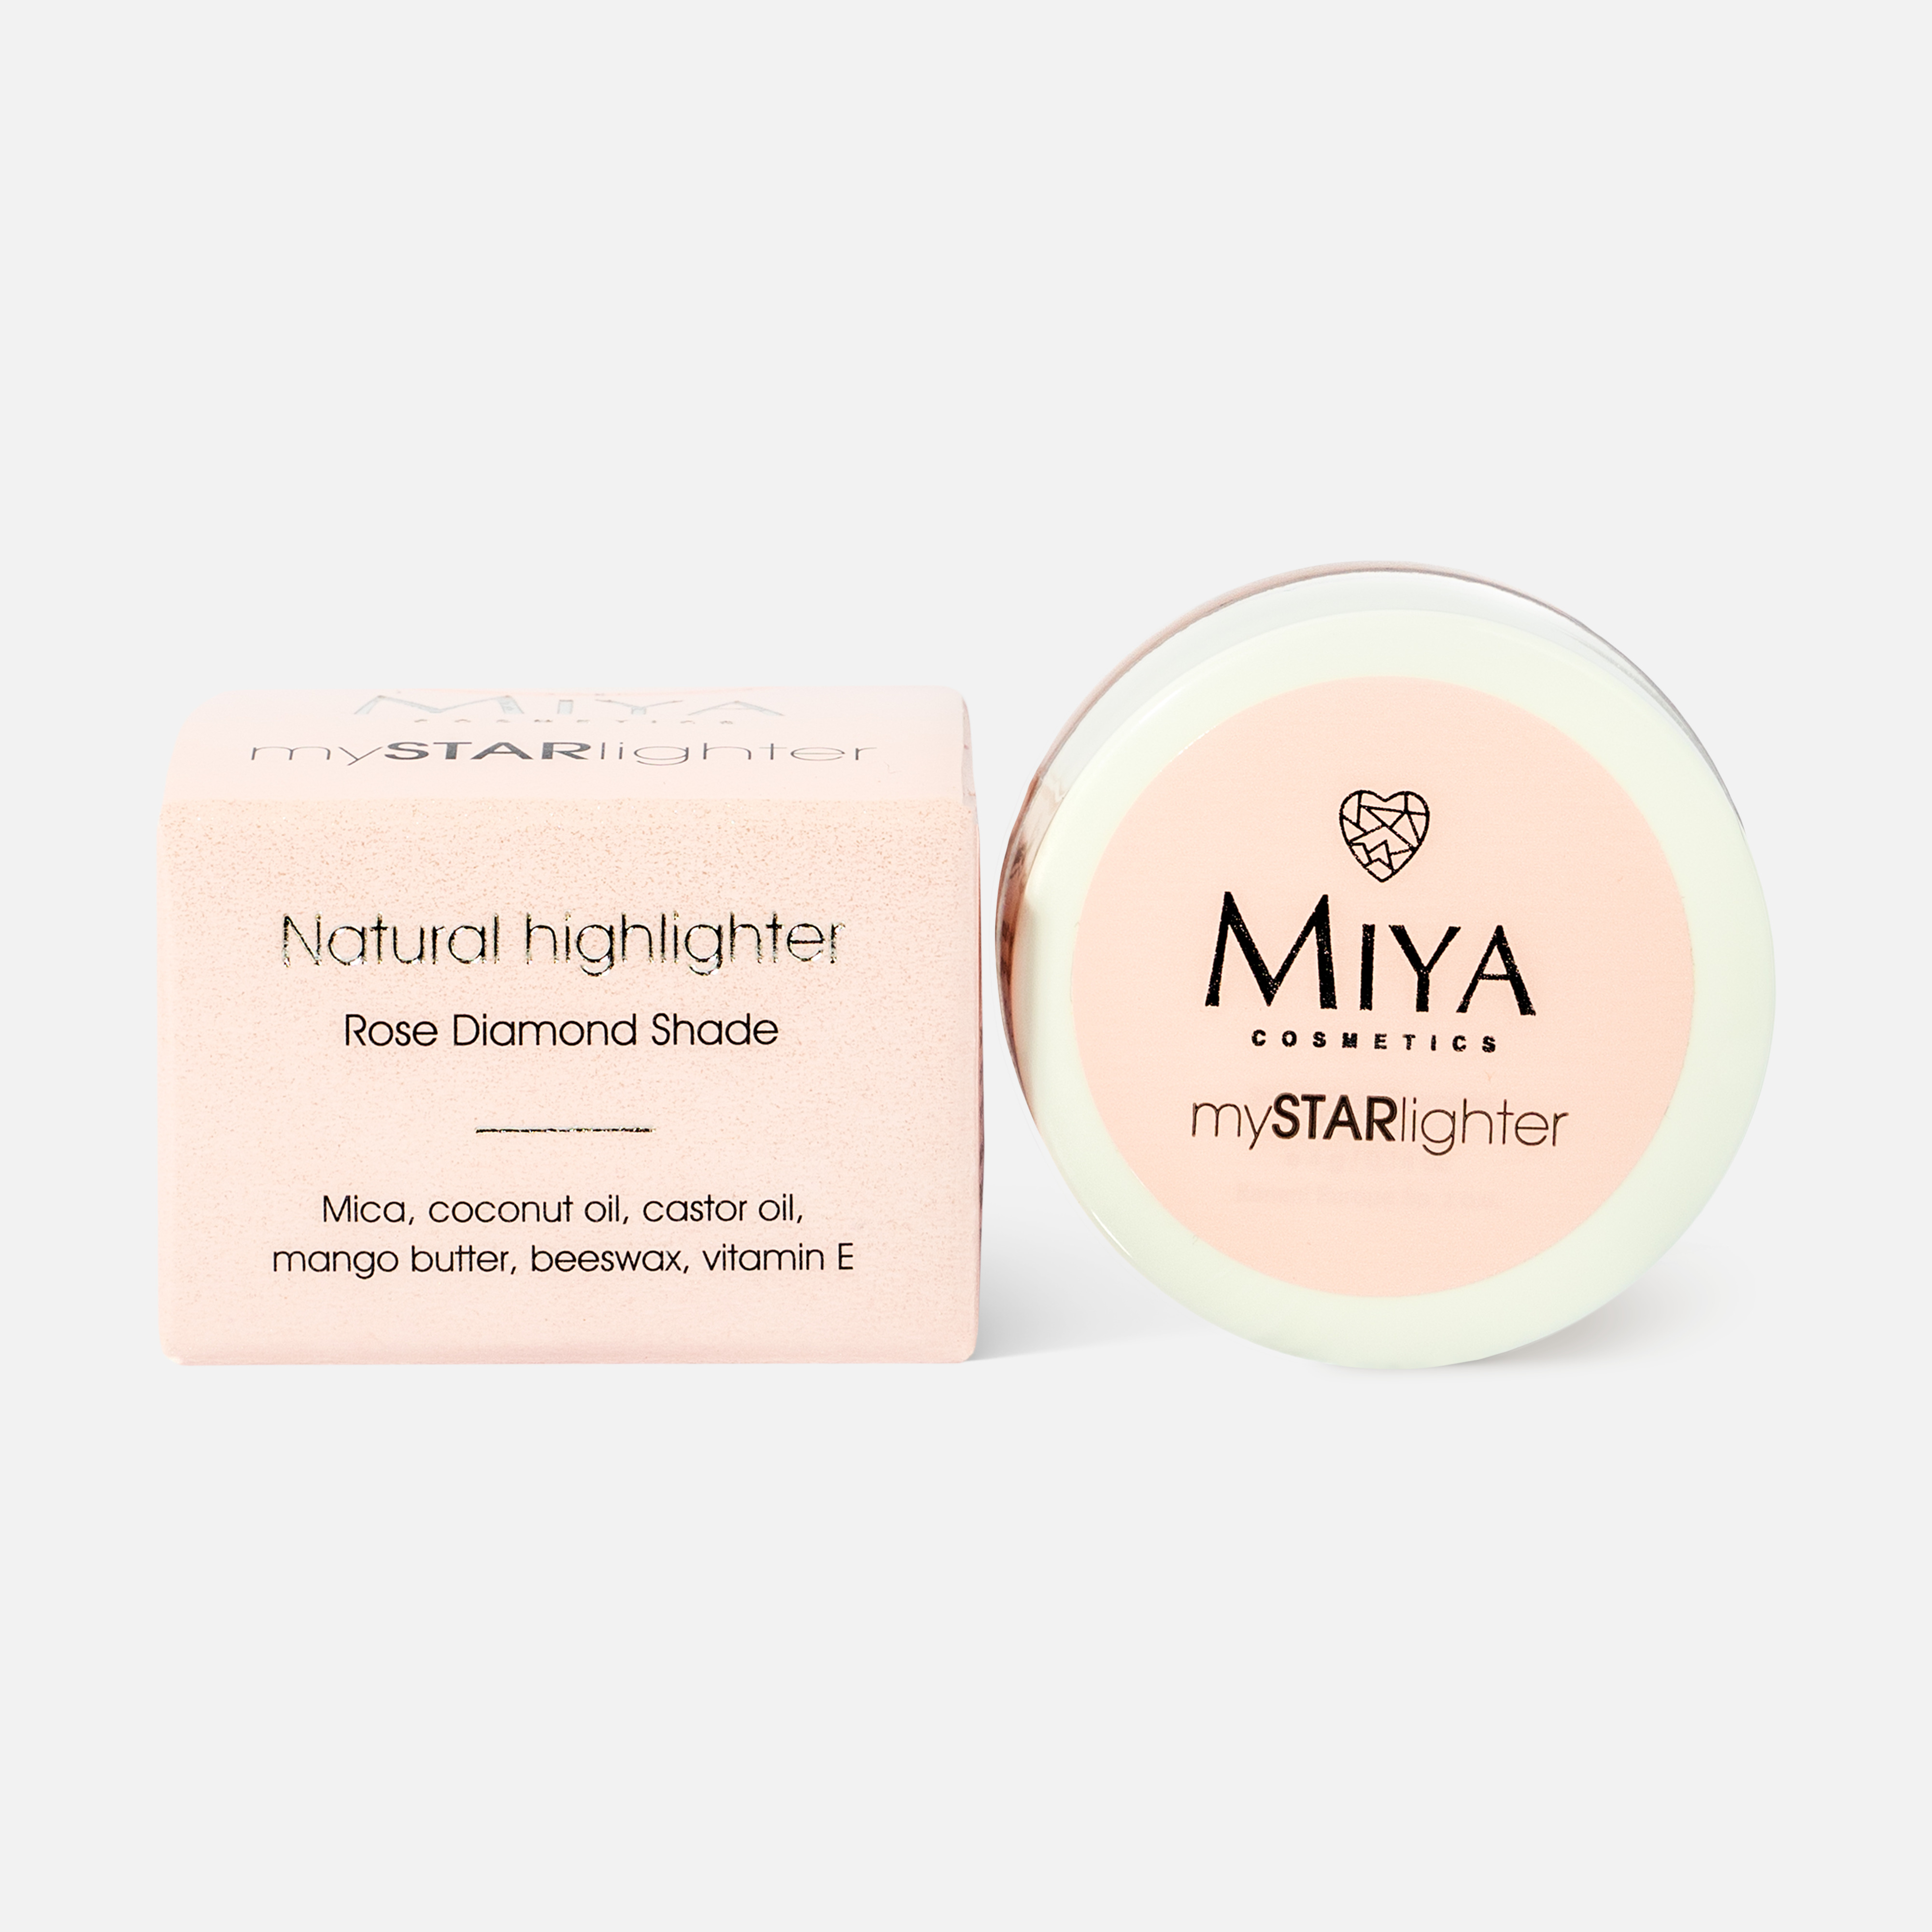 Хайлайтер для лица Miya cosmetics Mystarlighter Rose Diamond, 4 г молочко хайлайтер для тела vilsen family cosmetics с эффектом натурального загара 100 мл